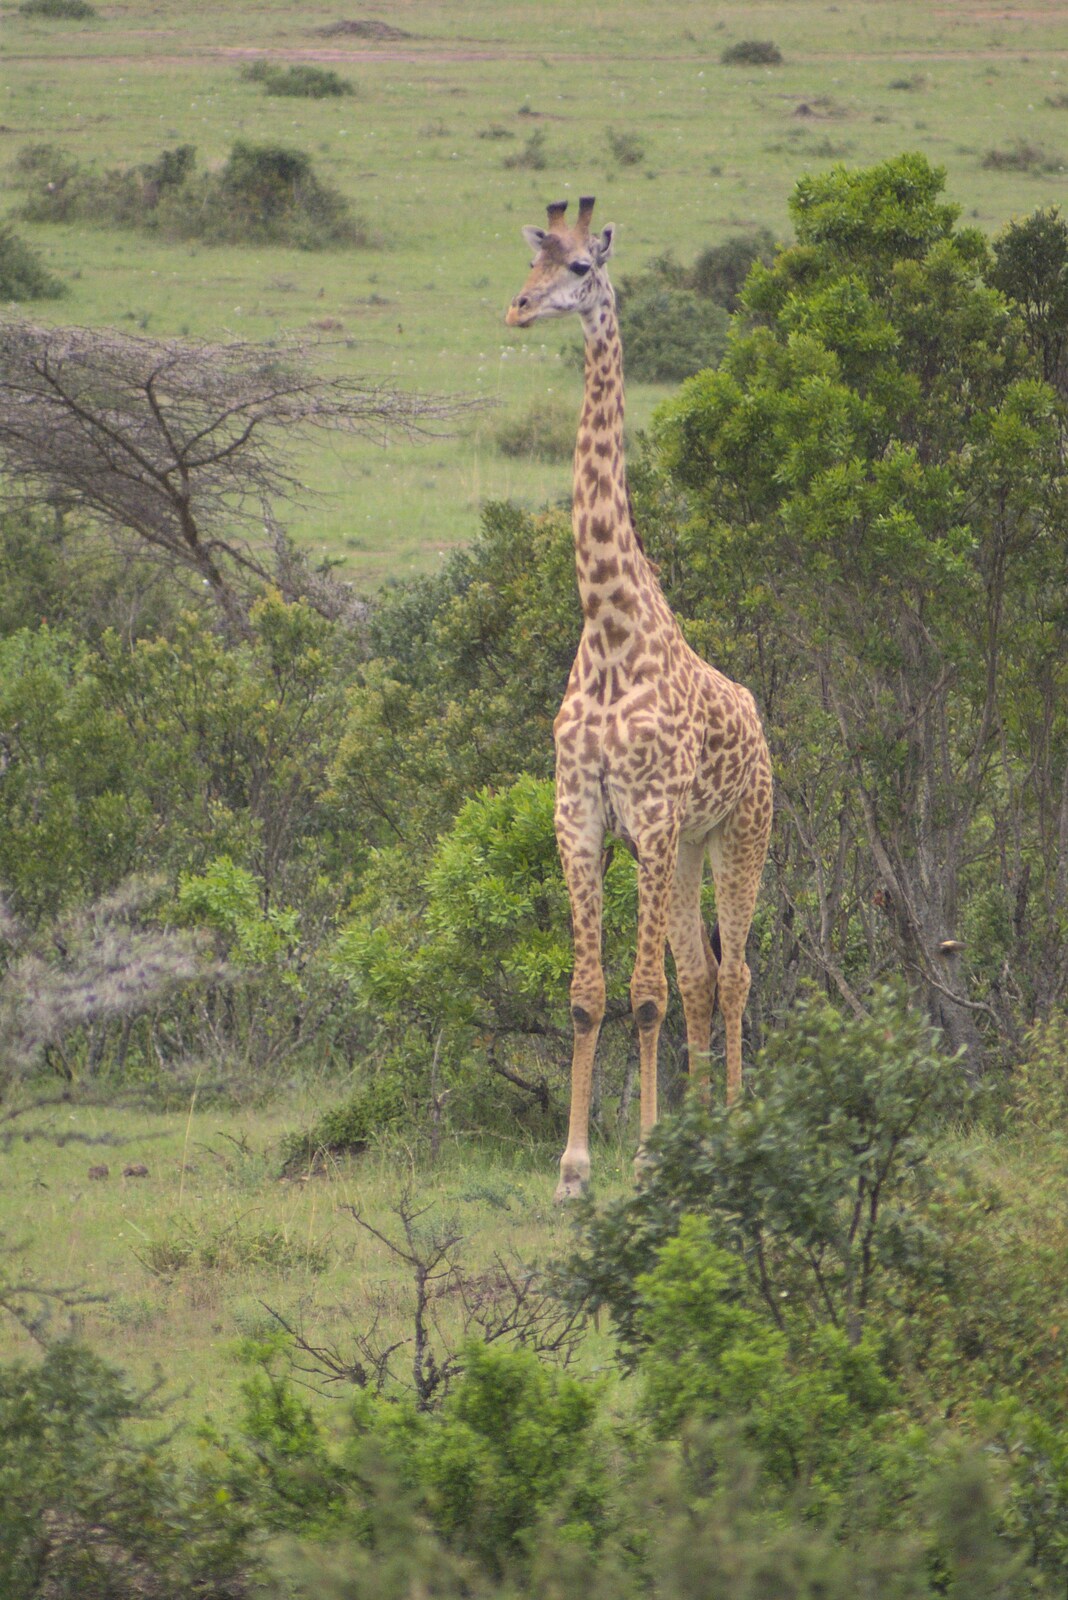 Maasai Mara Safari and a Maasai Village, Ololaimutia, Kenya - 5th November 2010: Our first close encounter: a giraffe